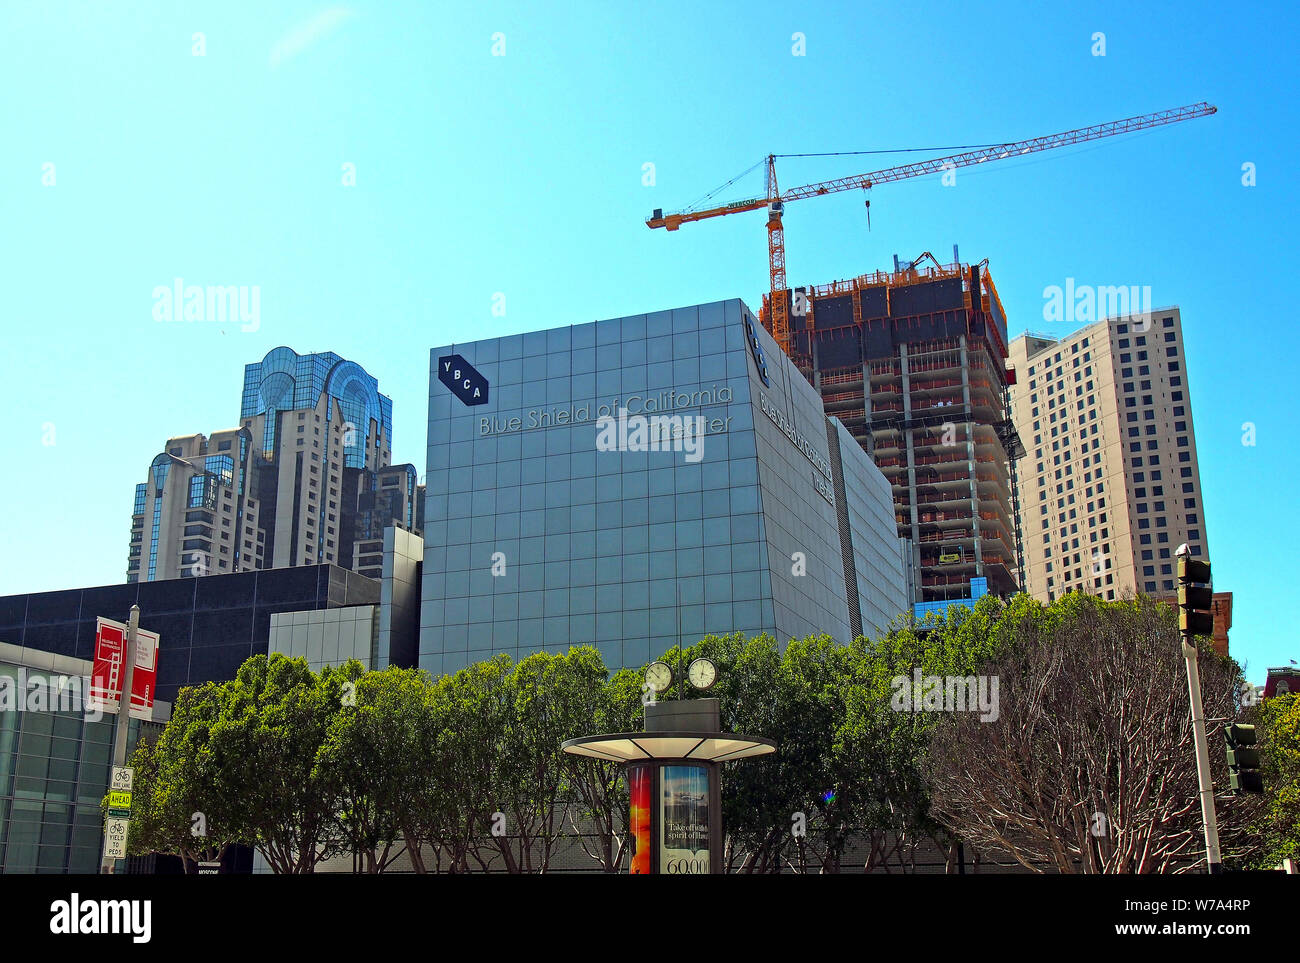 Blue Shield of California Theater in San Francisco, California Stock Photo